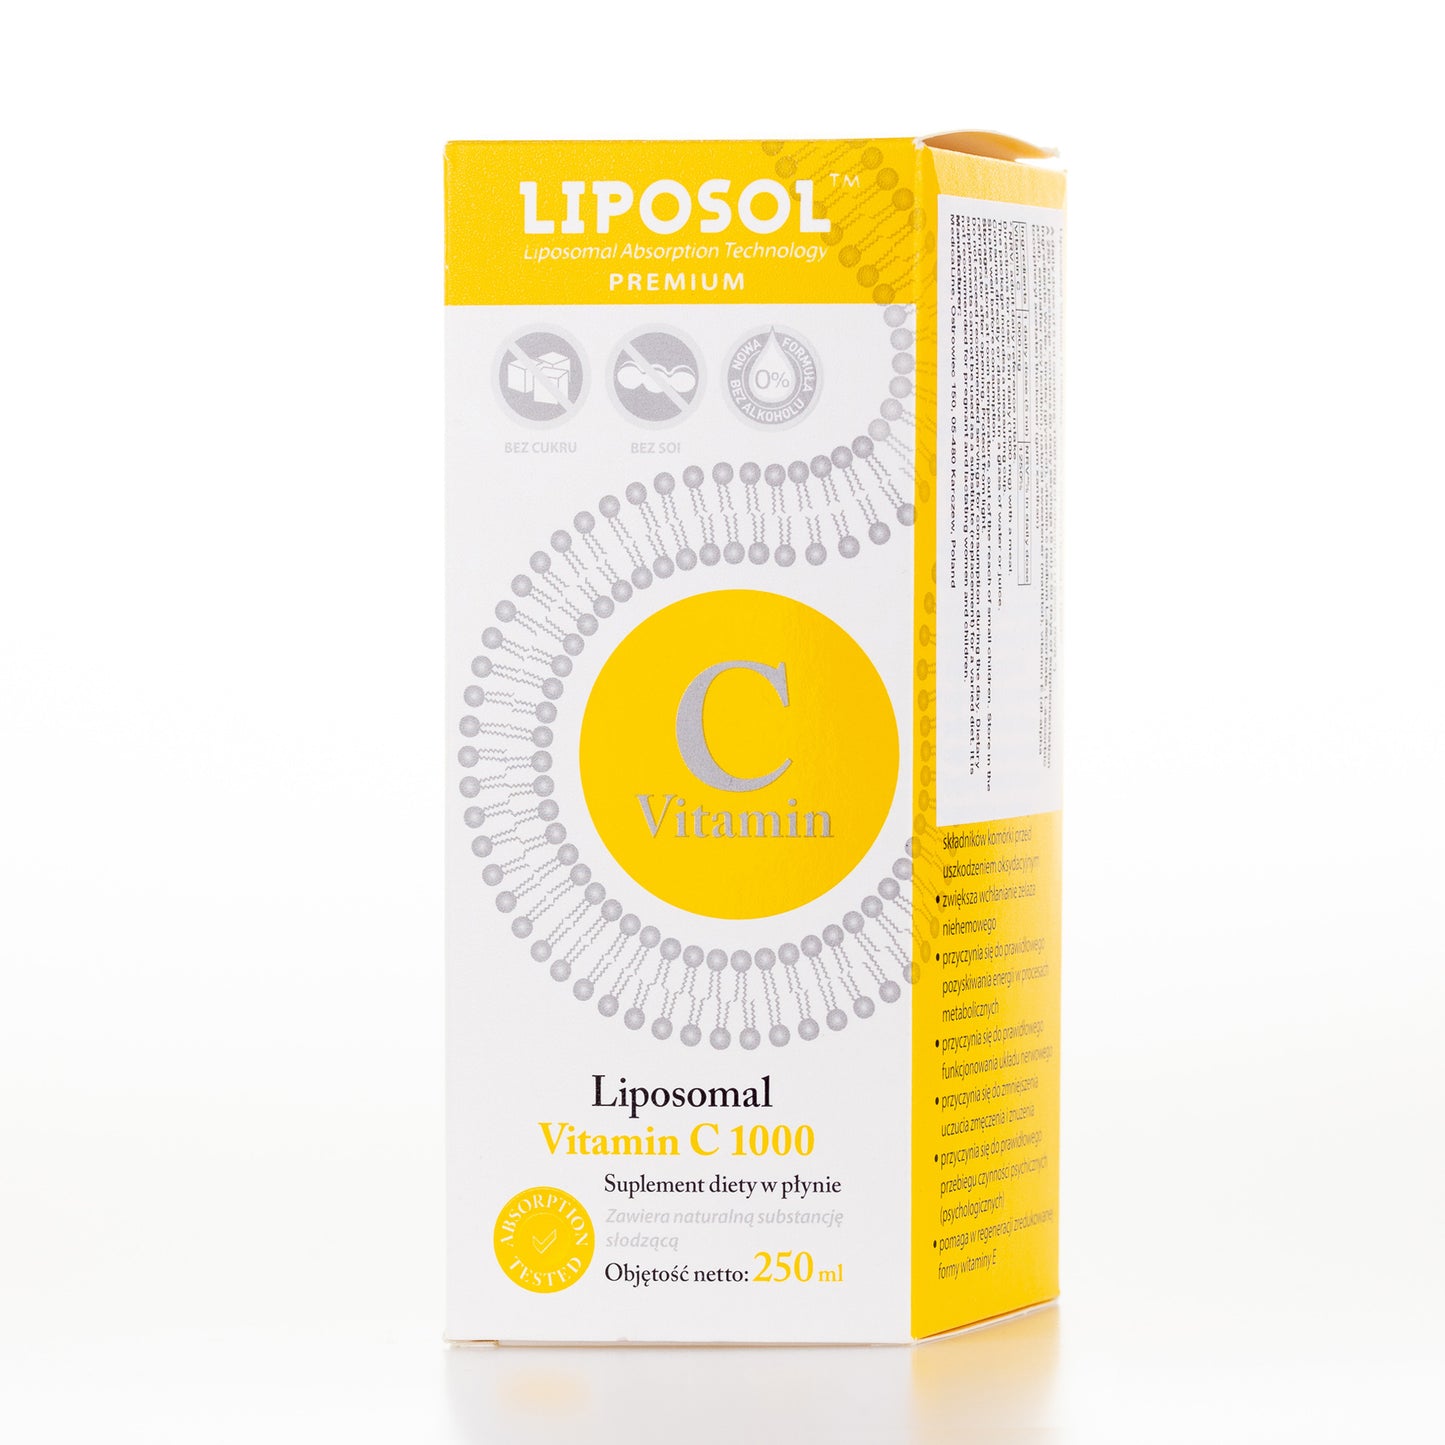 Liposol C, Liposomalna Witamina C 1000 (Buforowana) 250 ml, smak naturalny